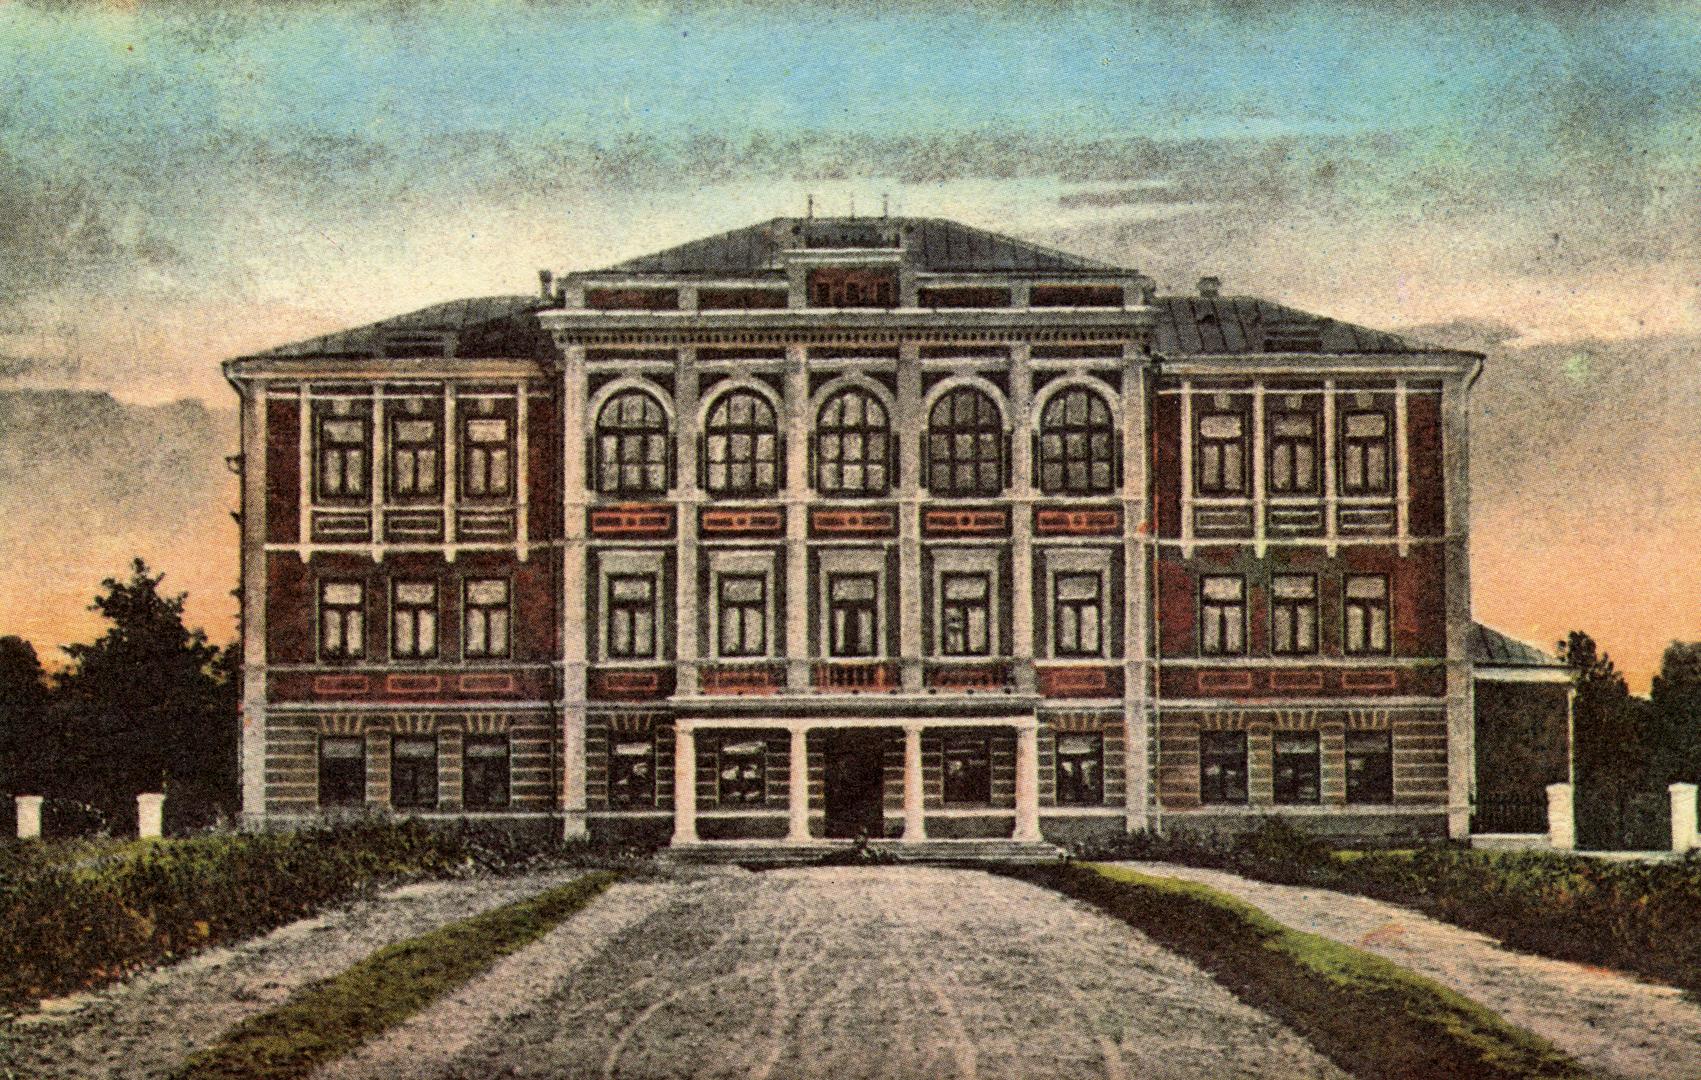 Rakvere Teachers Seminar (Pedagogical School) buildings and school gardens (1949-1982)